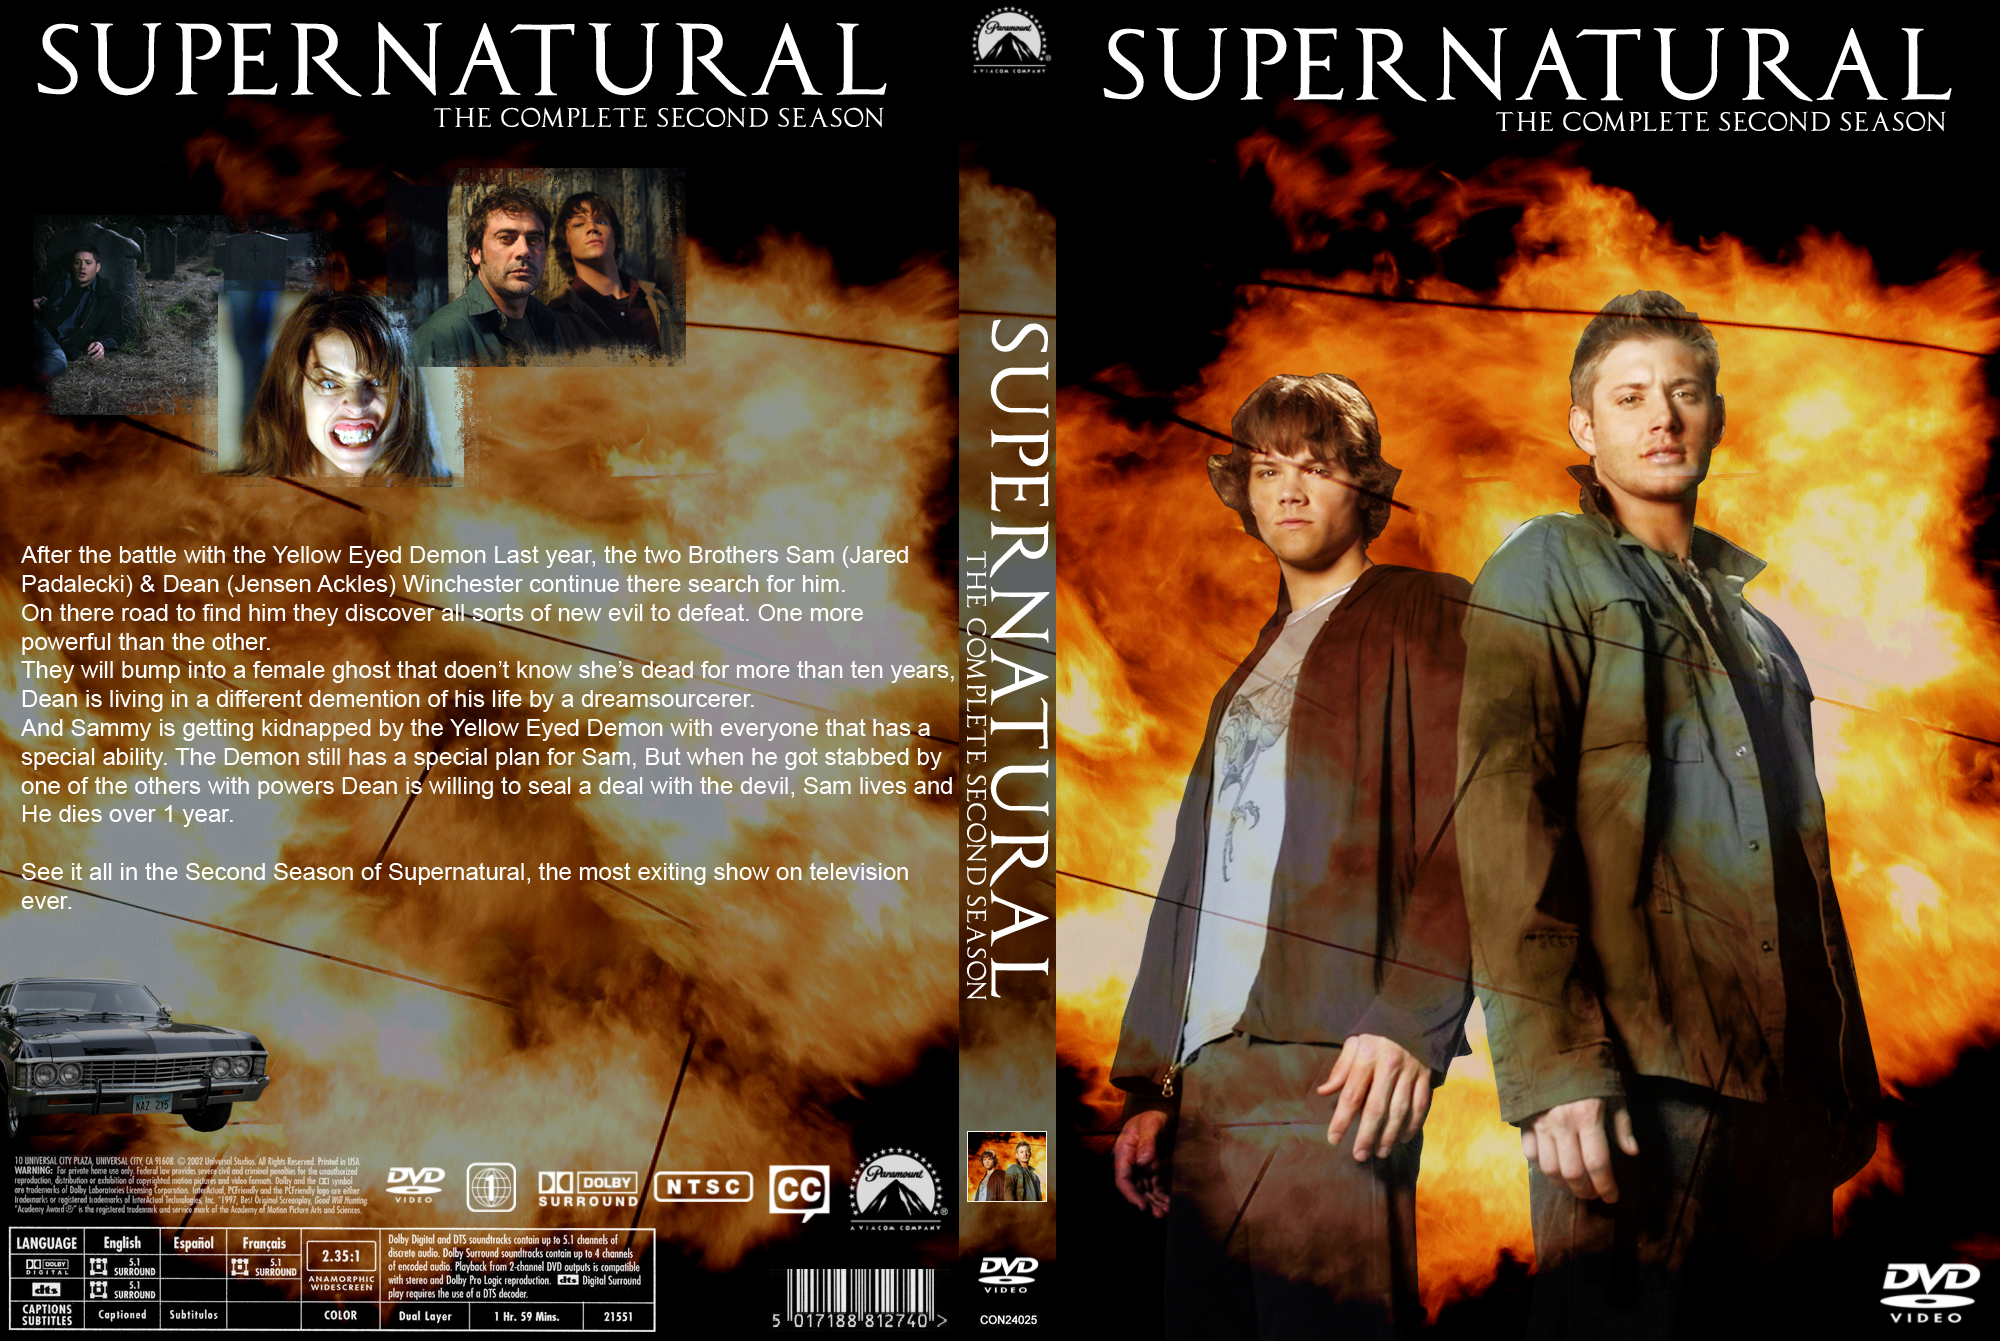 Problema ocupado protesta Supernatural Second Season DVD by TamaraP on DeviantArt